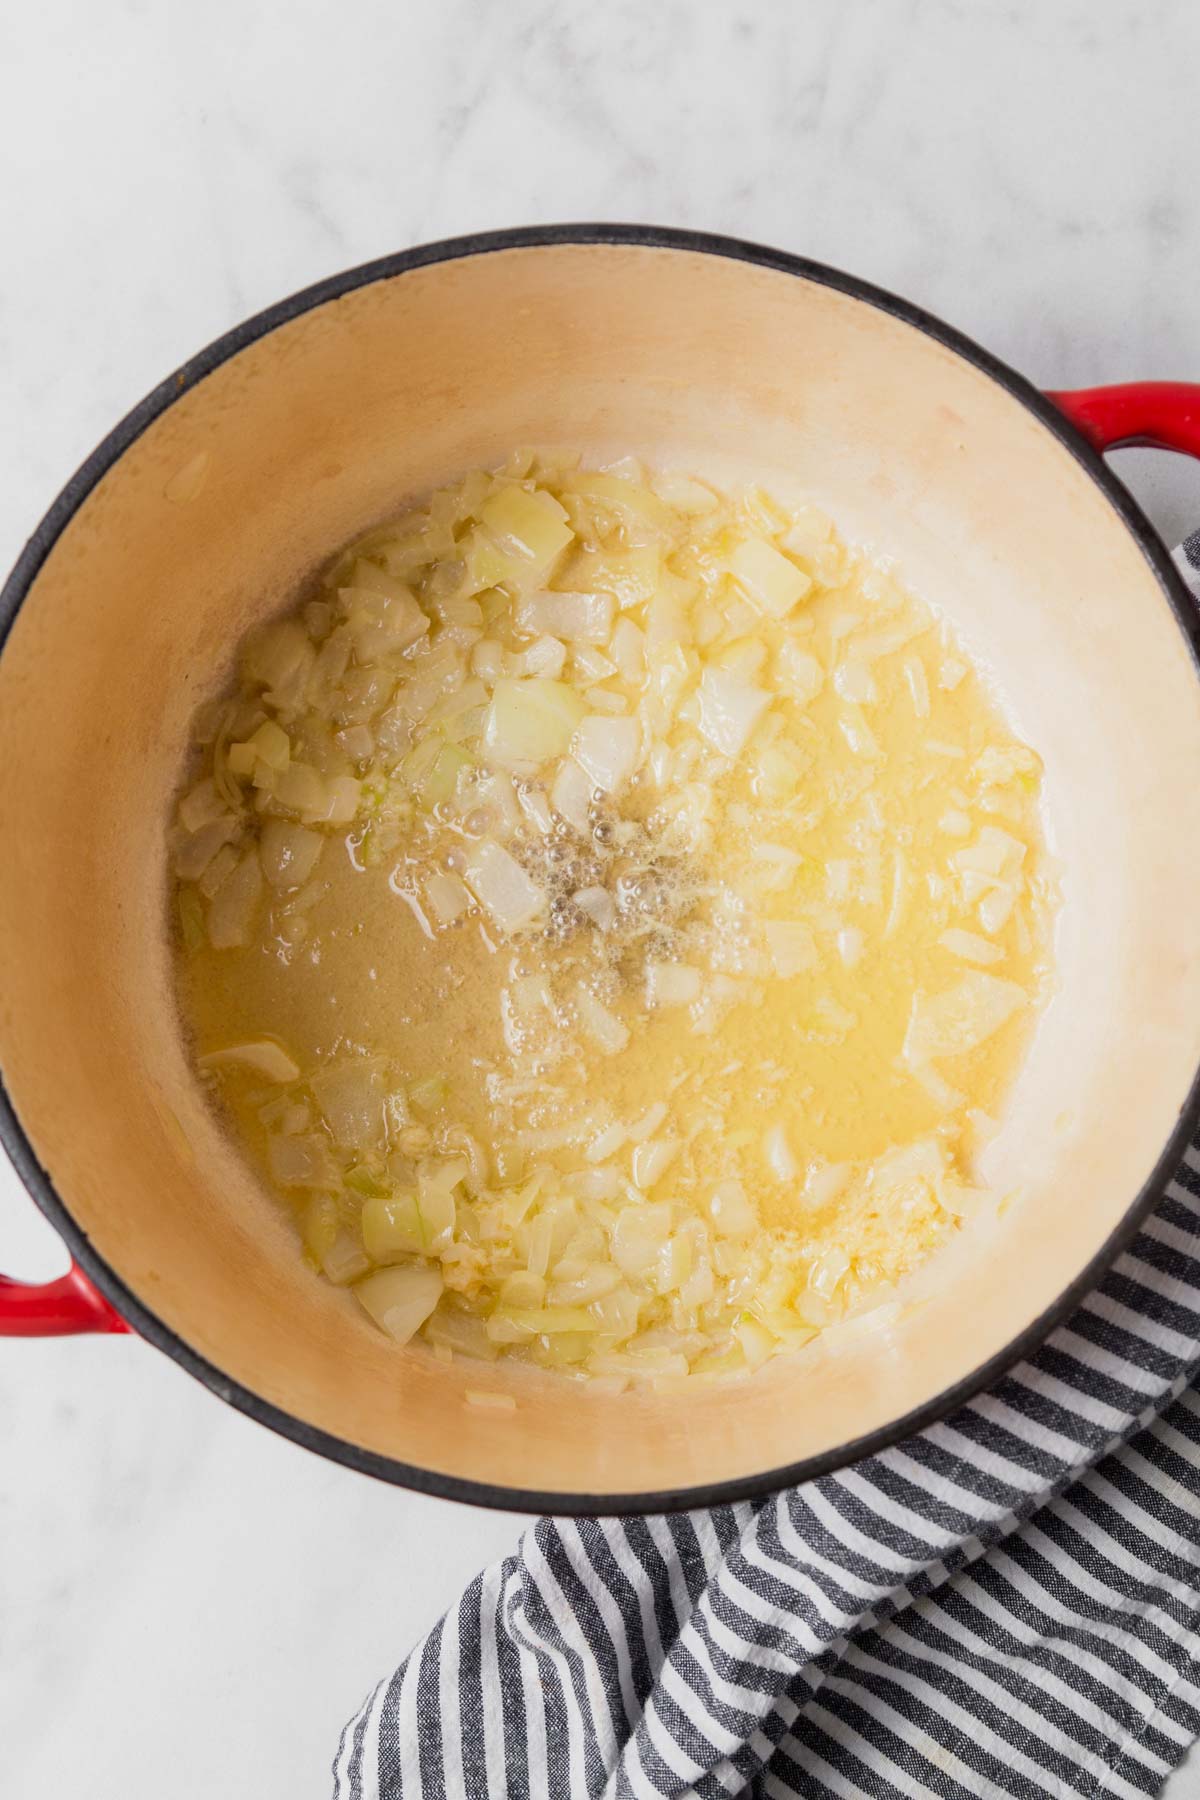 sautéing the onion and garlic